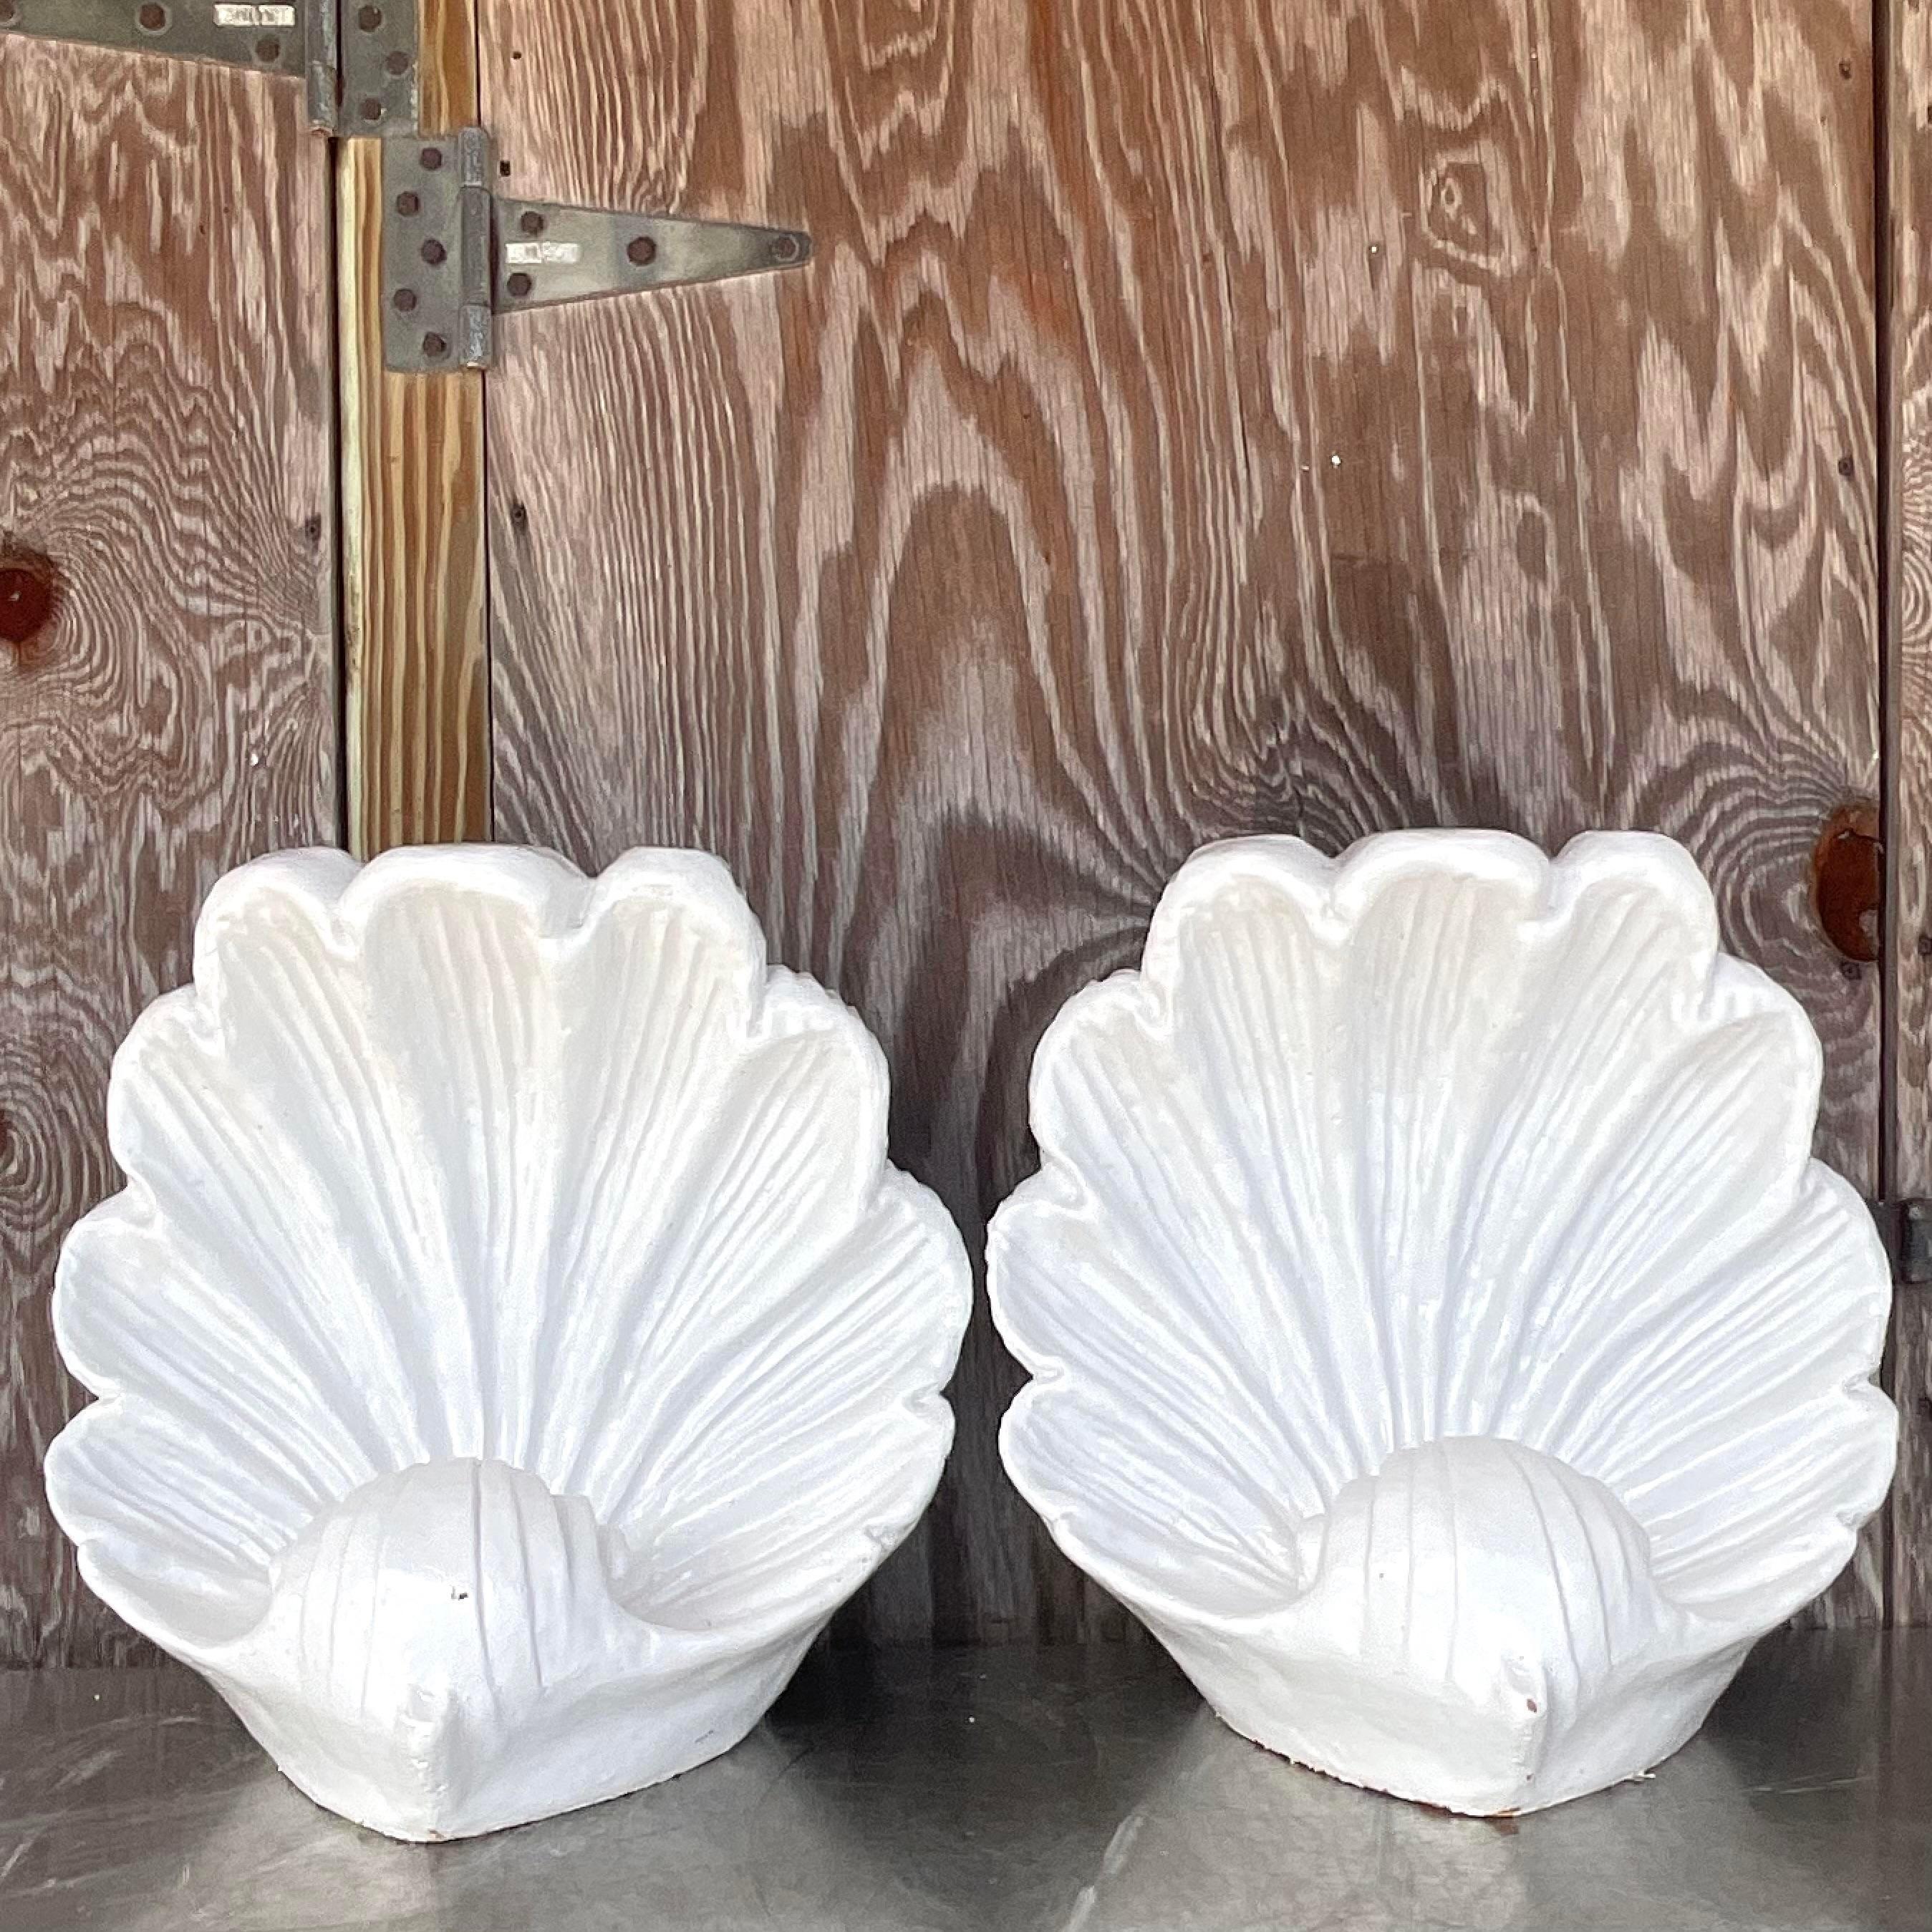 Vintage Coastal Glazed Ceramic Clam Shells - a Pair For Sale 1